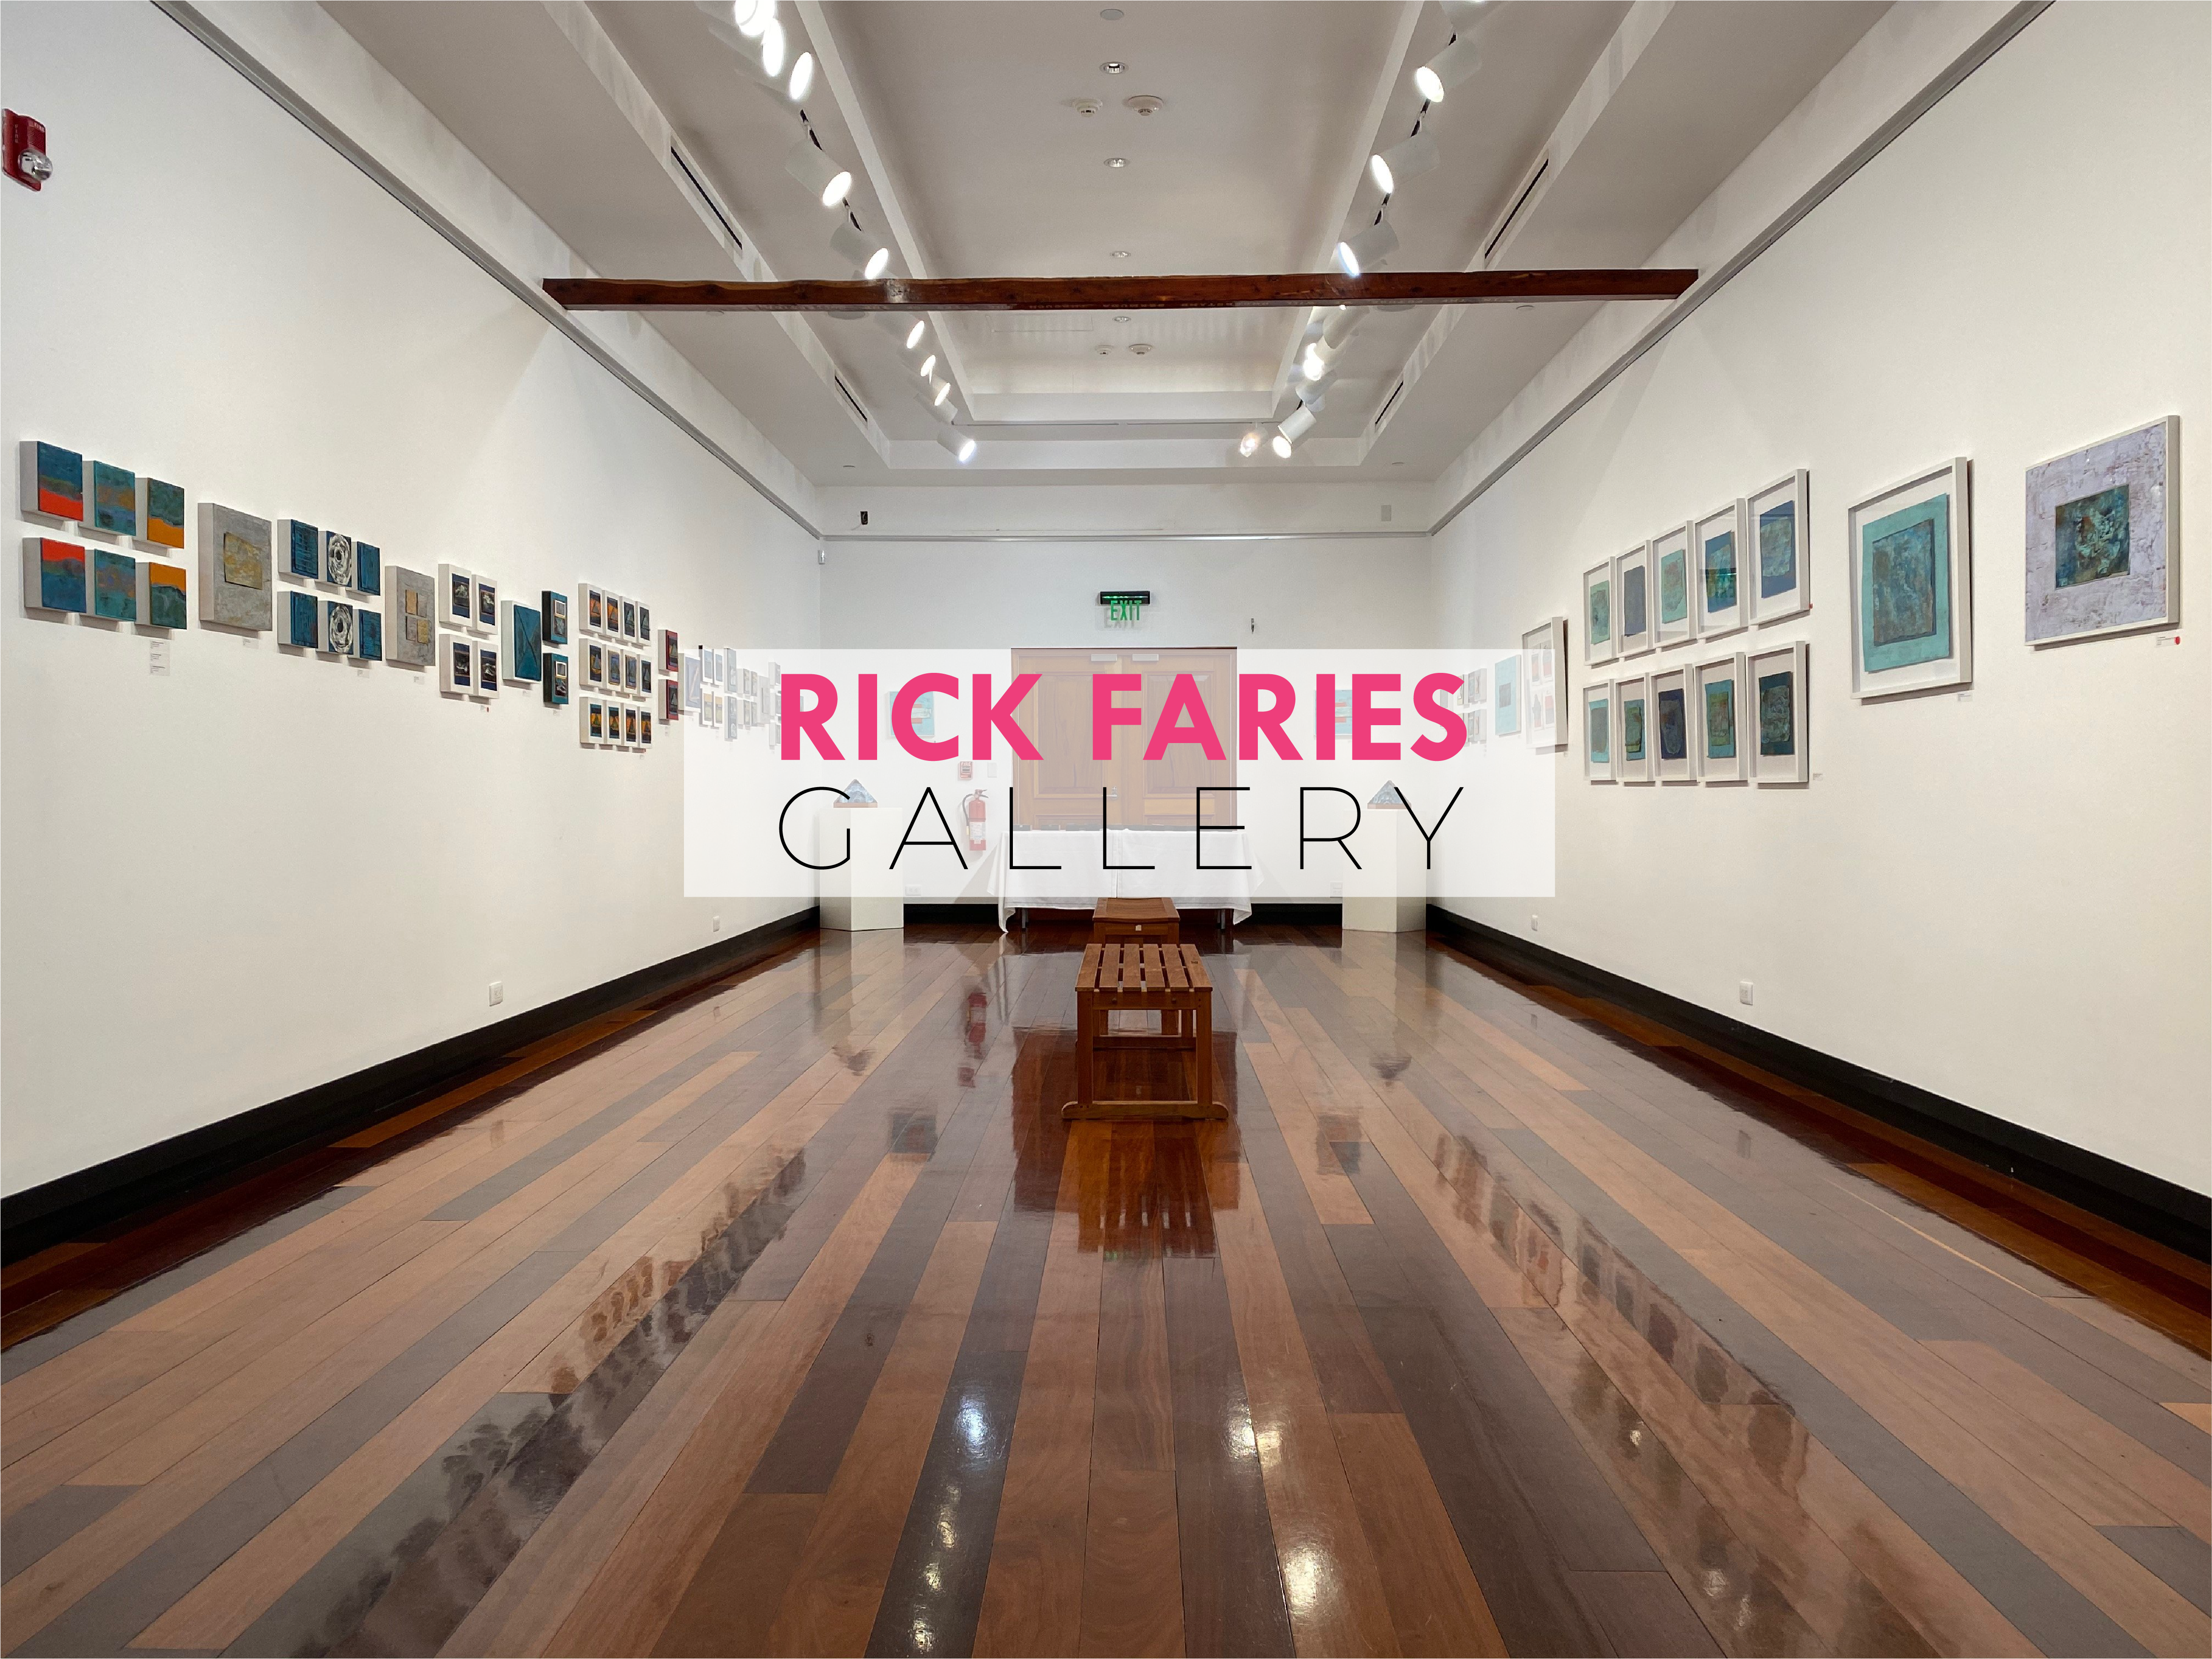 Rick Faries Gallery